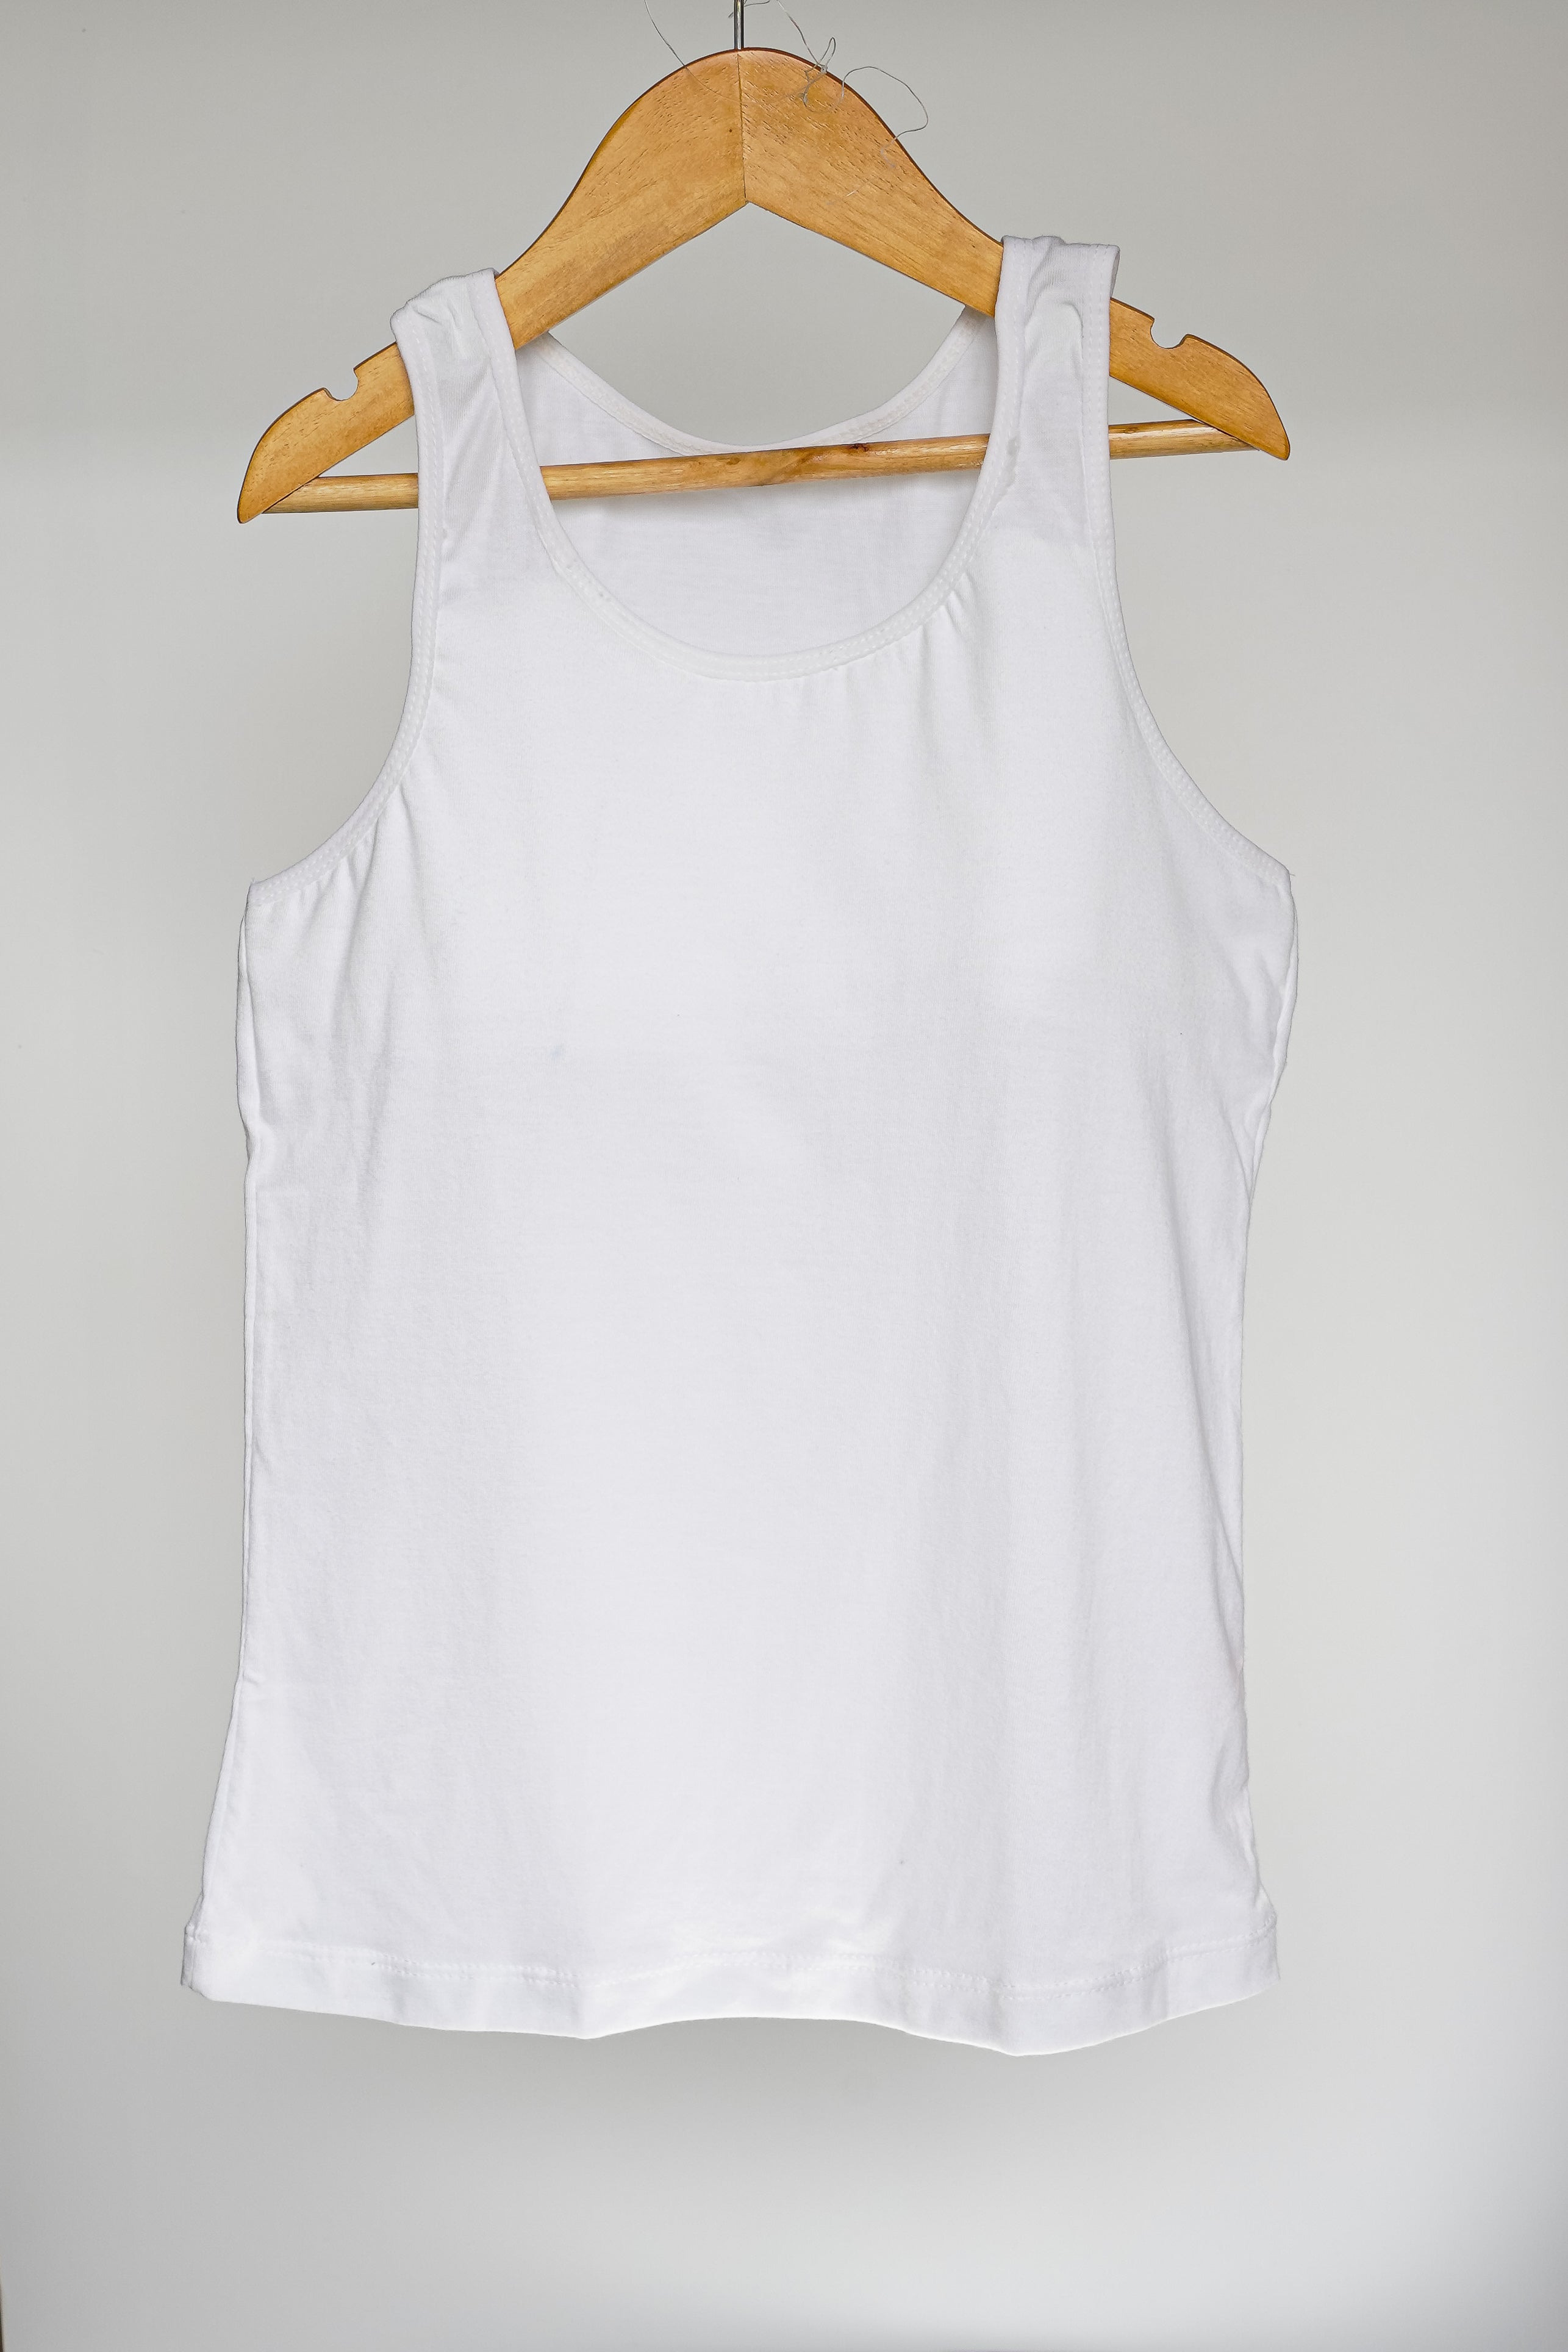 Plain White Sando Shirt With Pads (SA-06) – Kiddie Closet PHL